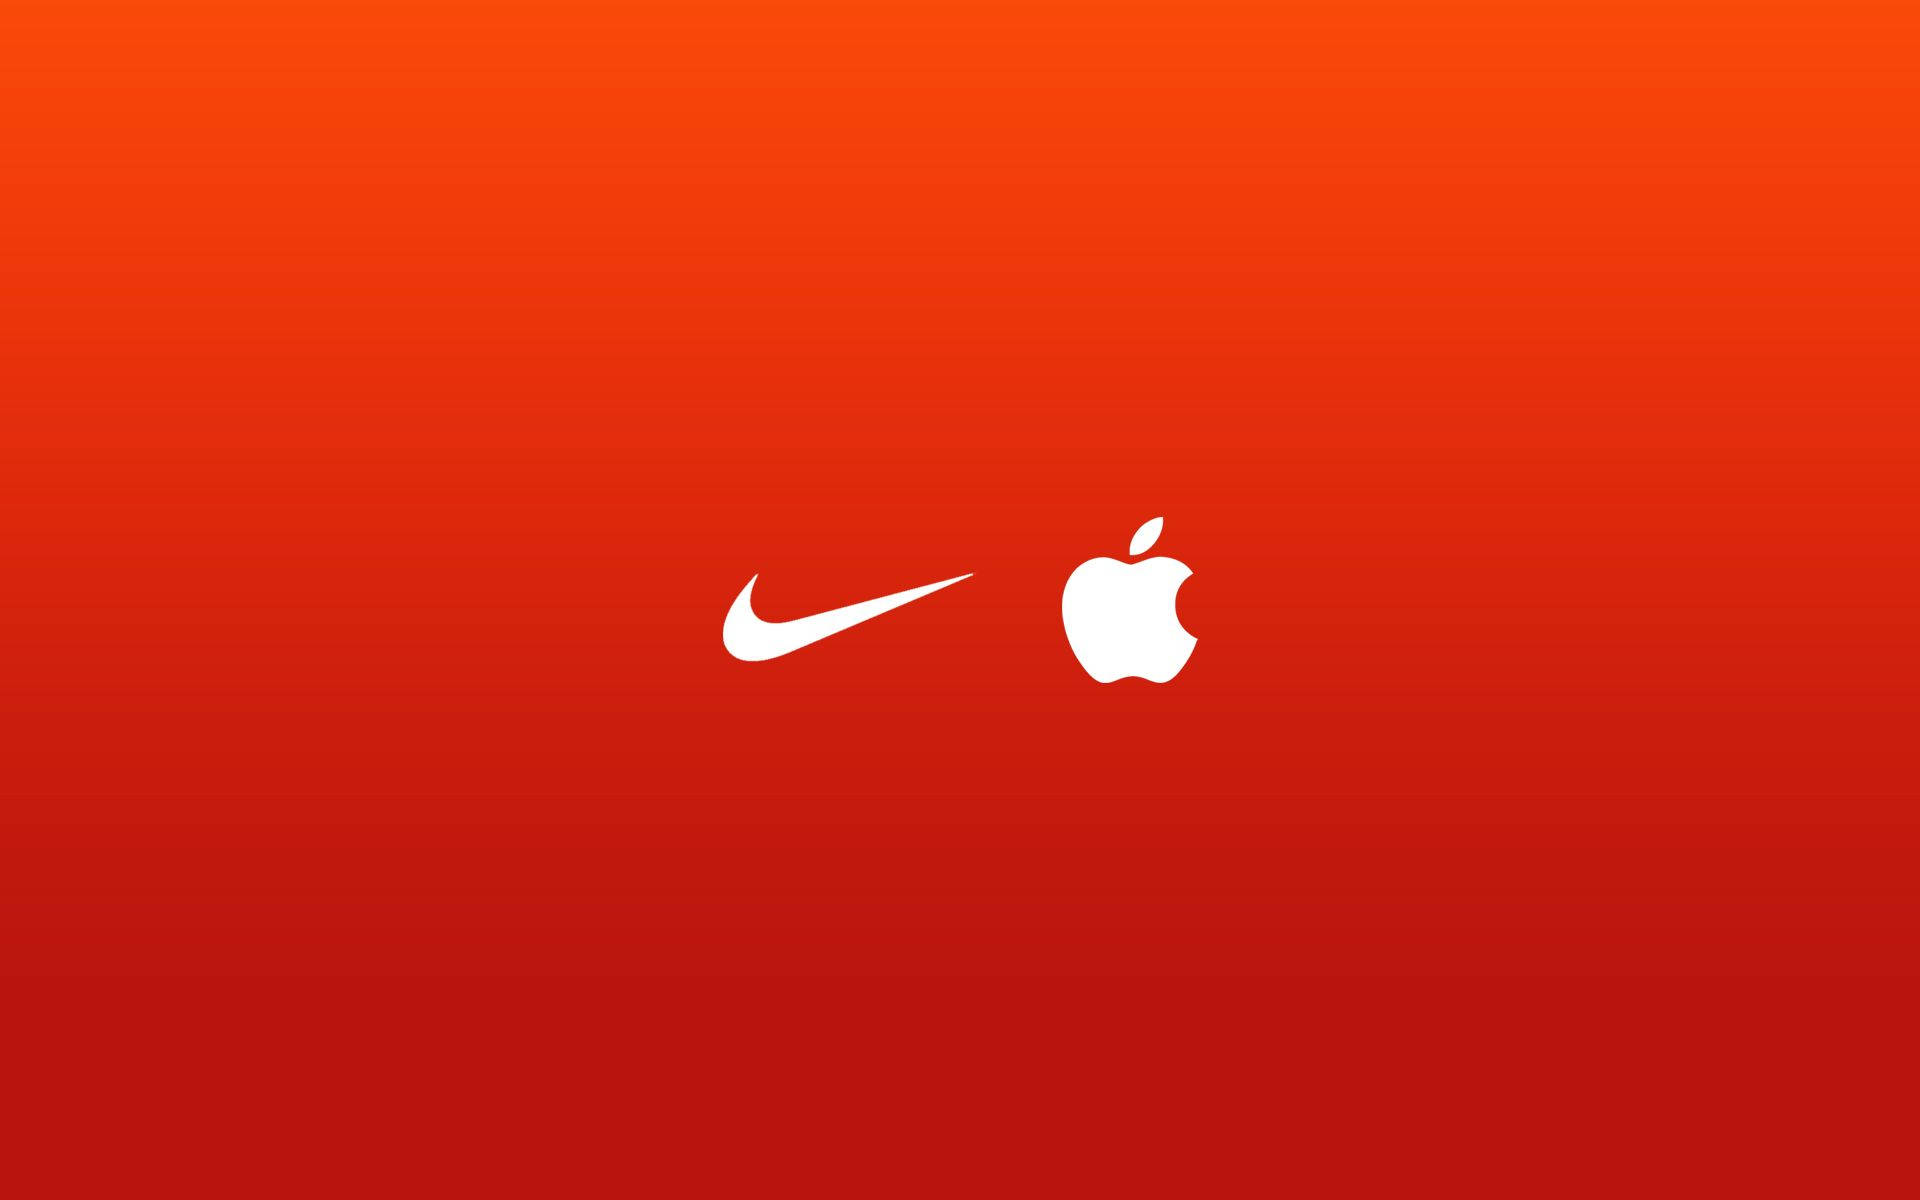 Cool Minimal Nike And Apple Emblem